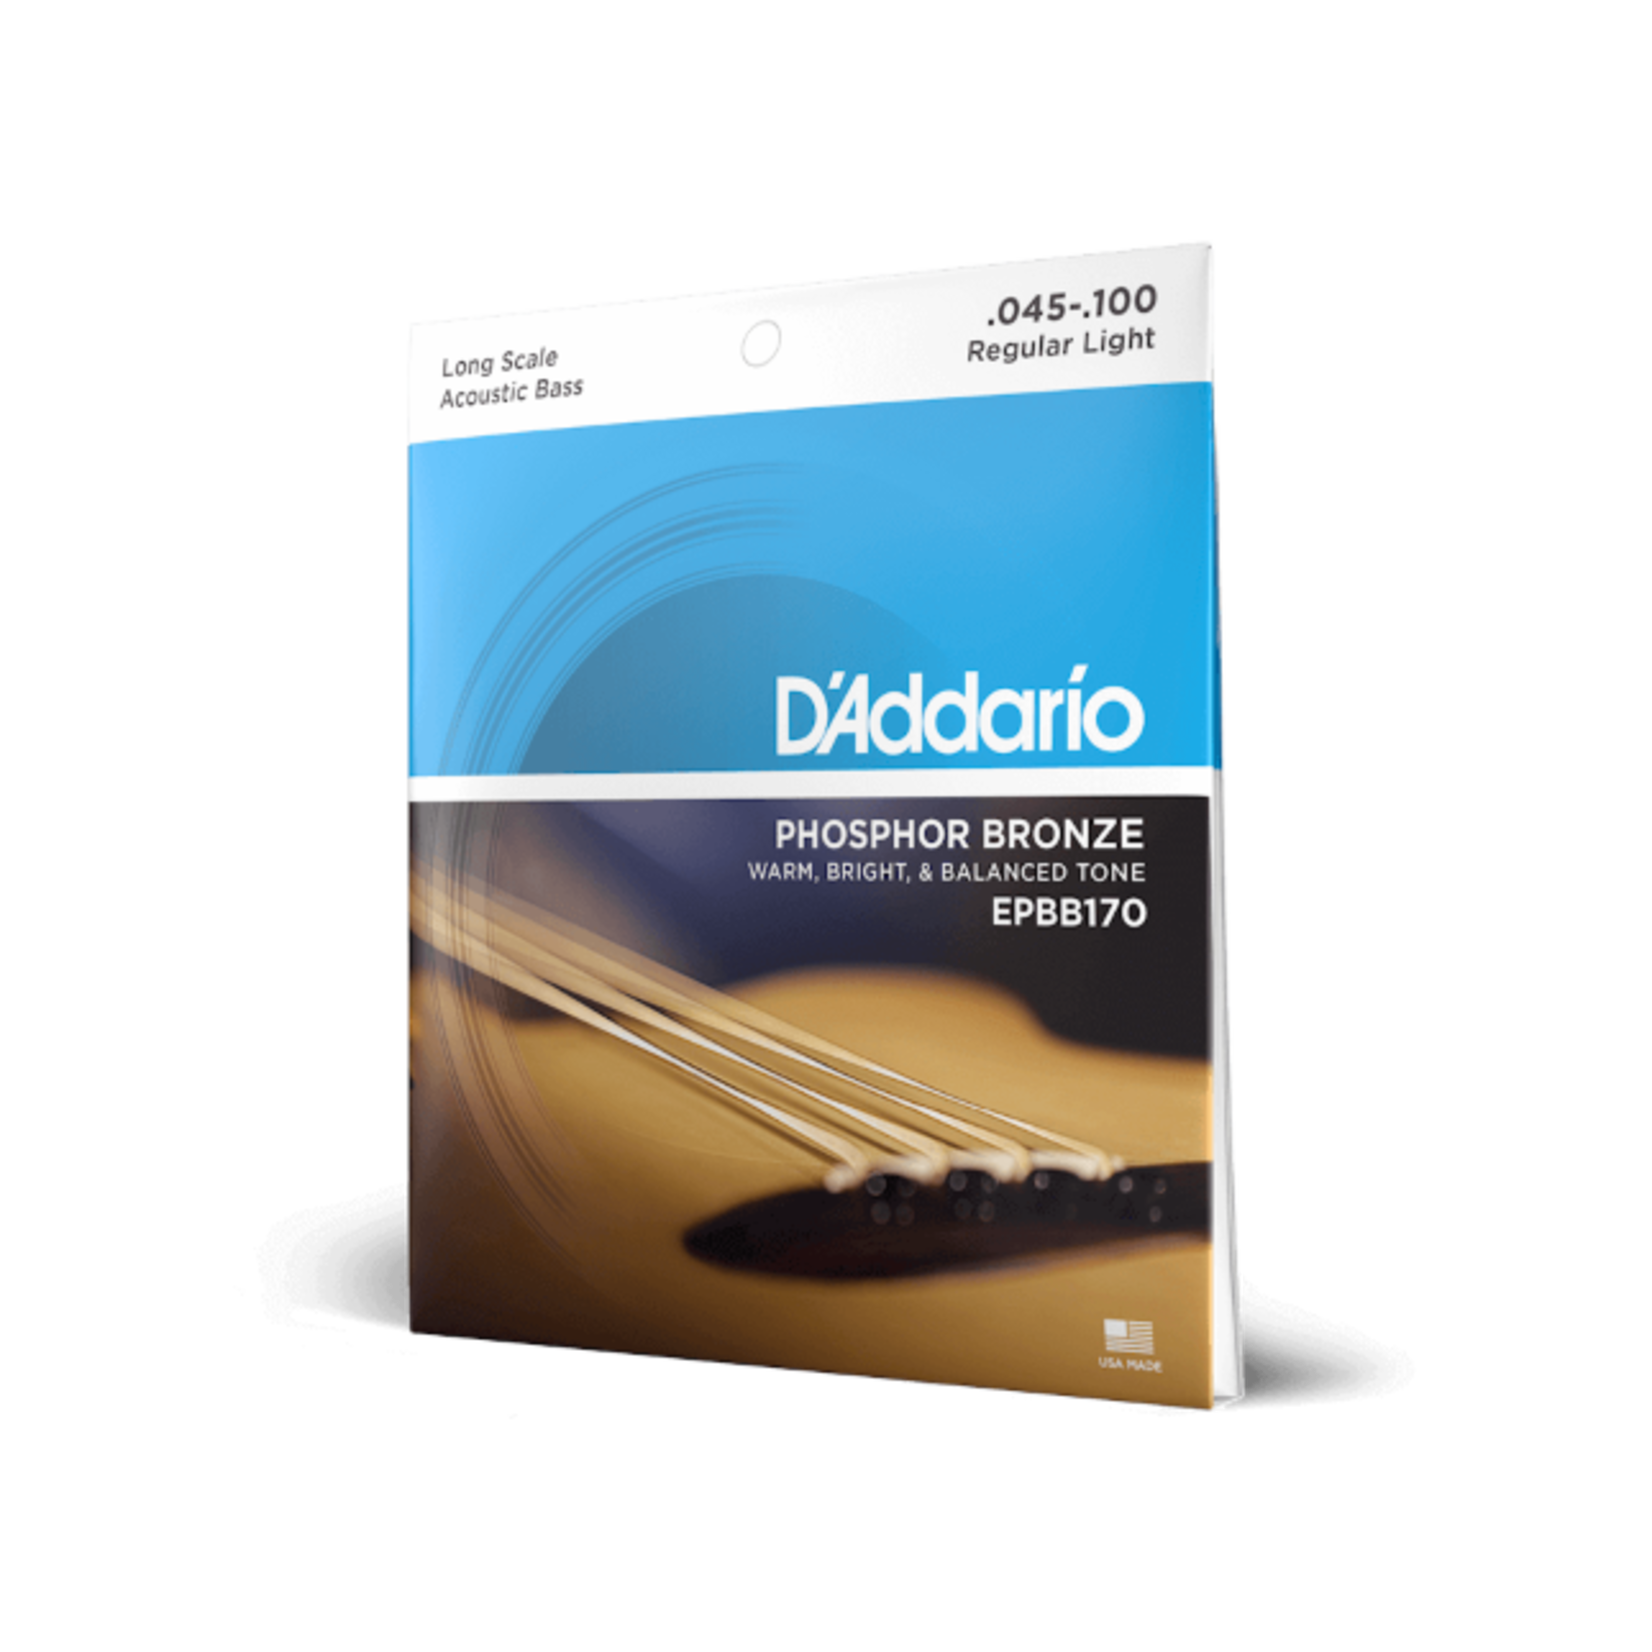 D’Addario D'addario Phosphor bronze acoustic bass strings long scale 045-100 EPBB170